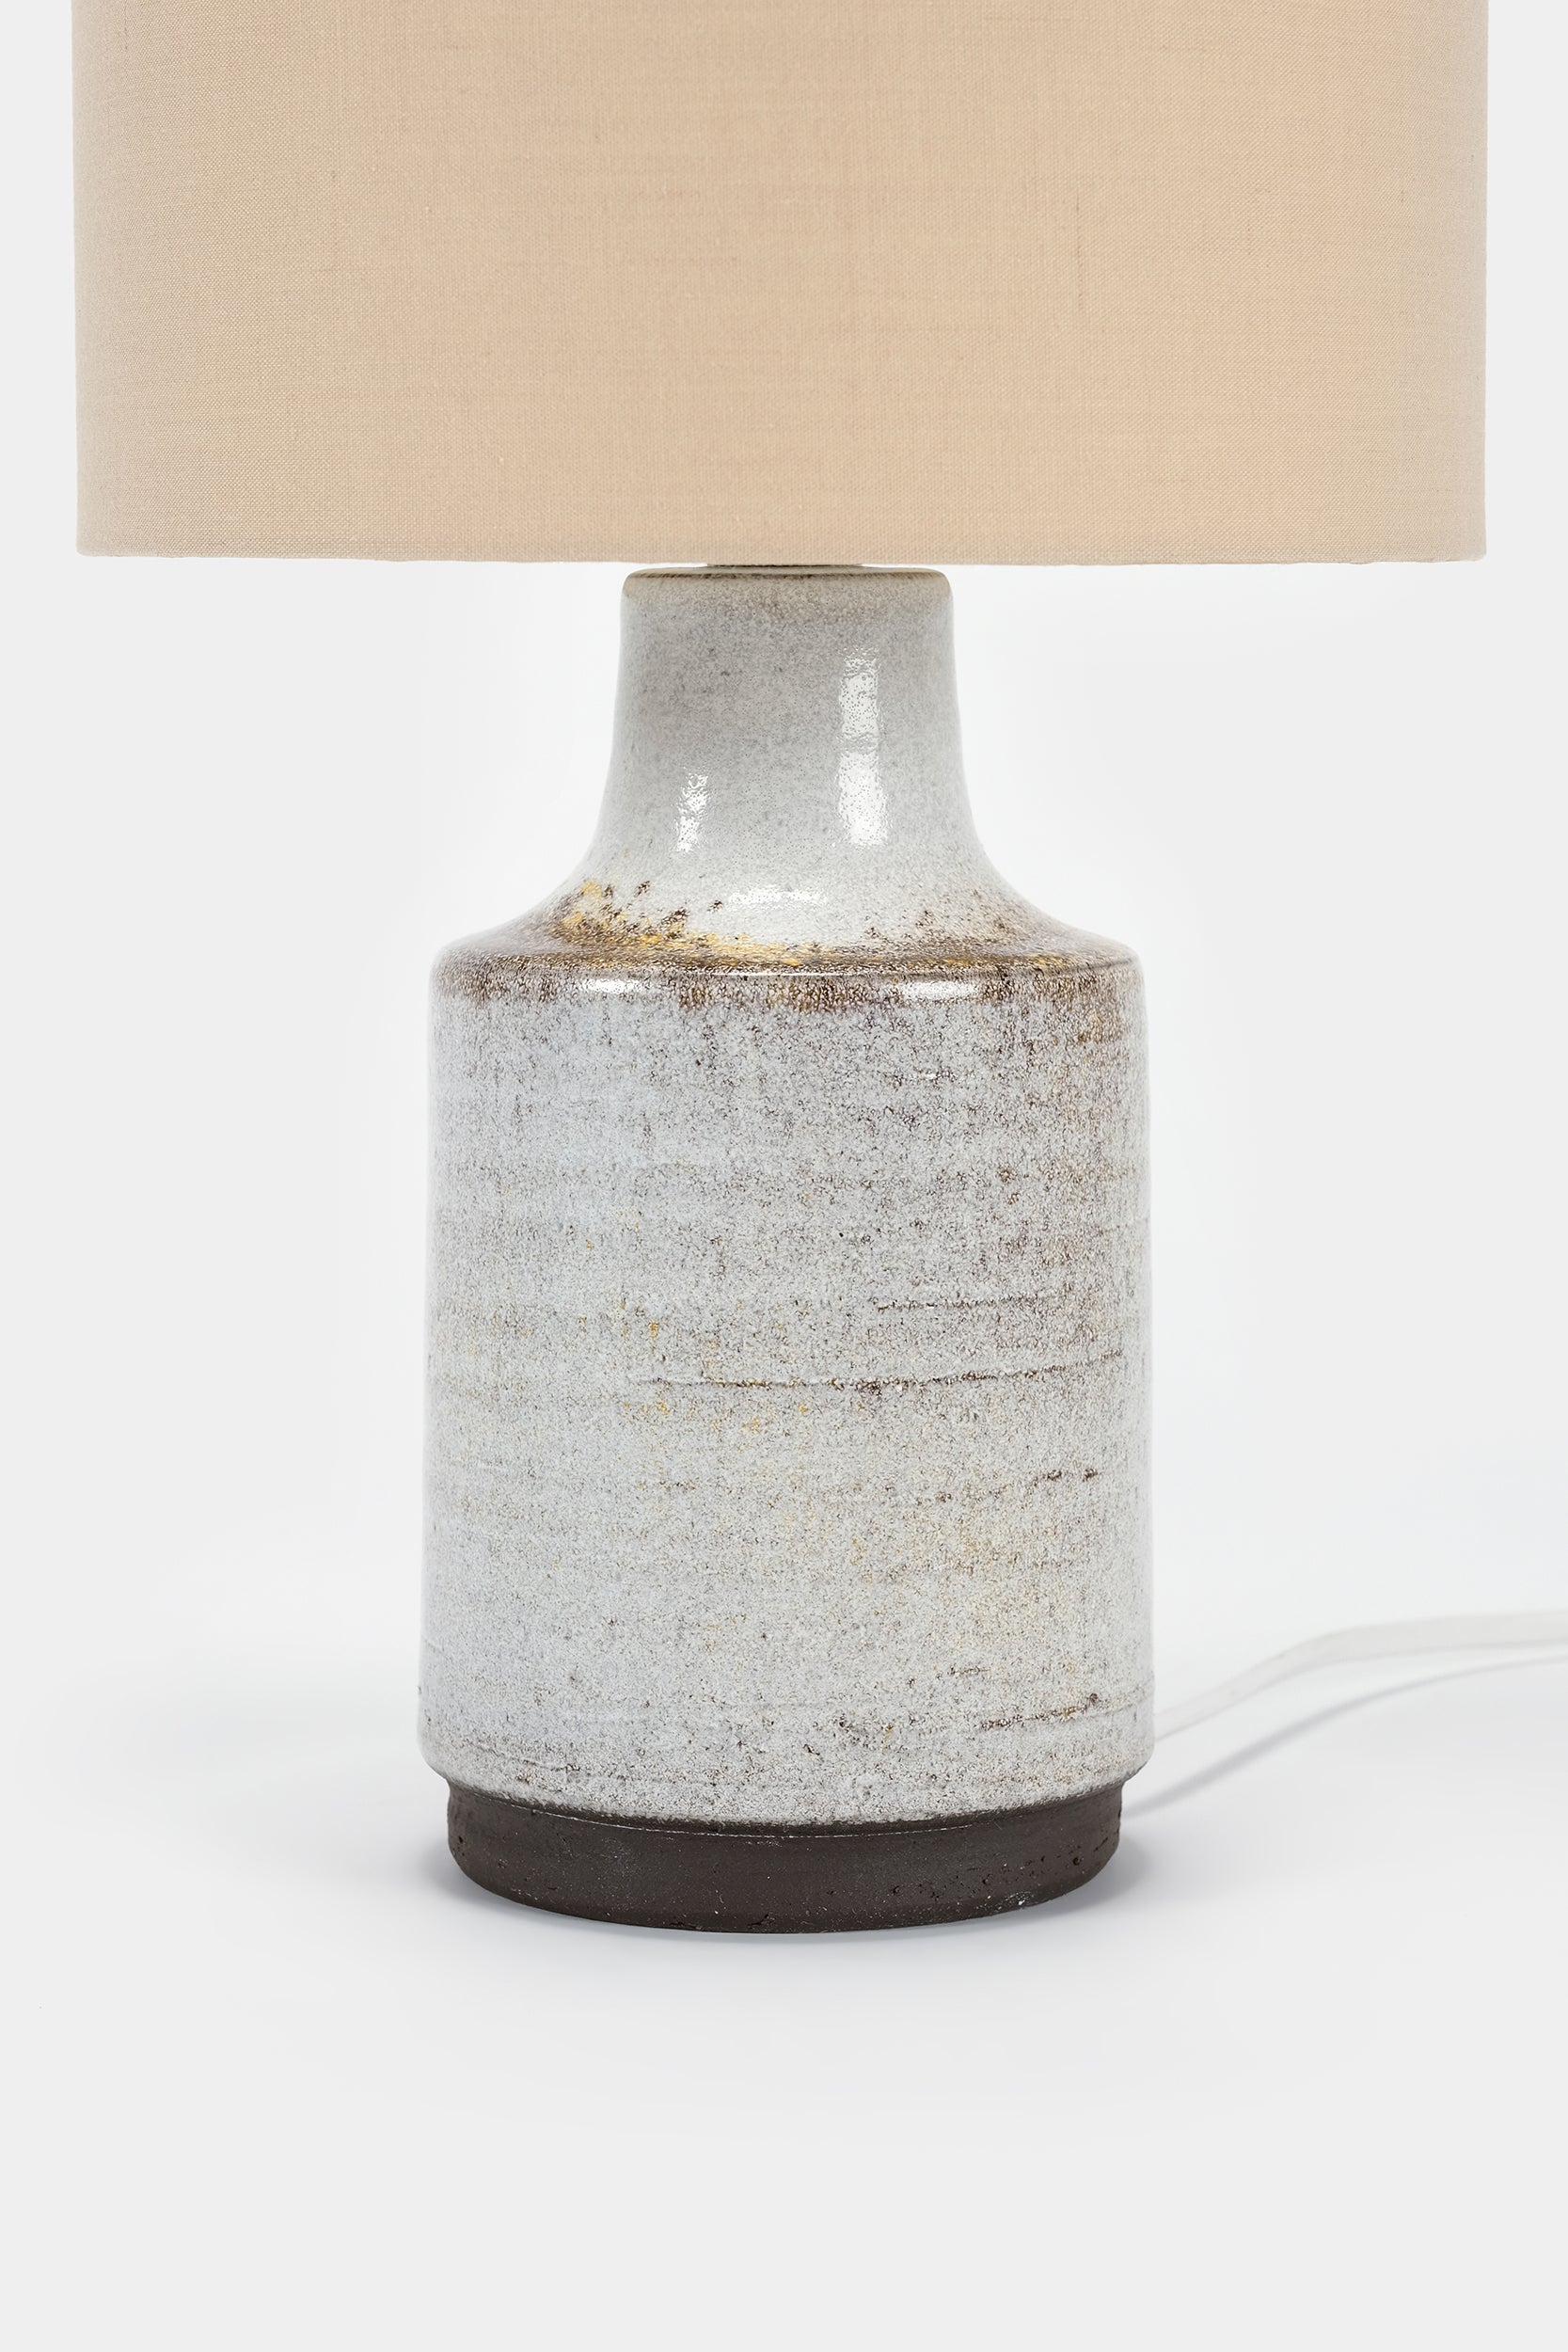 Pair of Table Lamps, Stentoj Soholm, Denmark, 60s